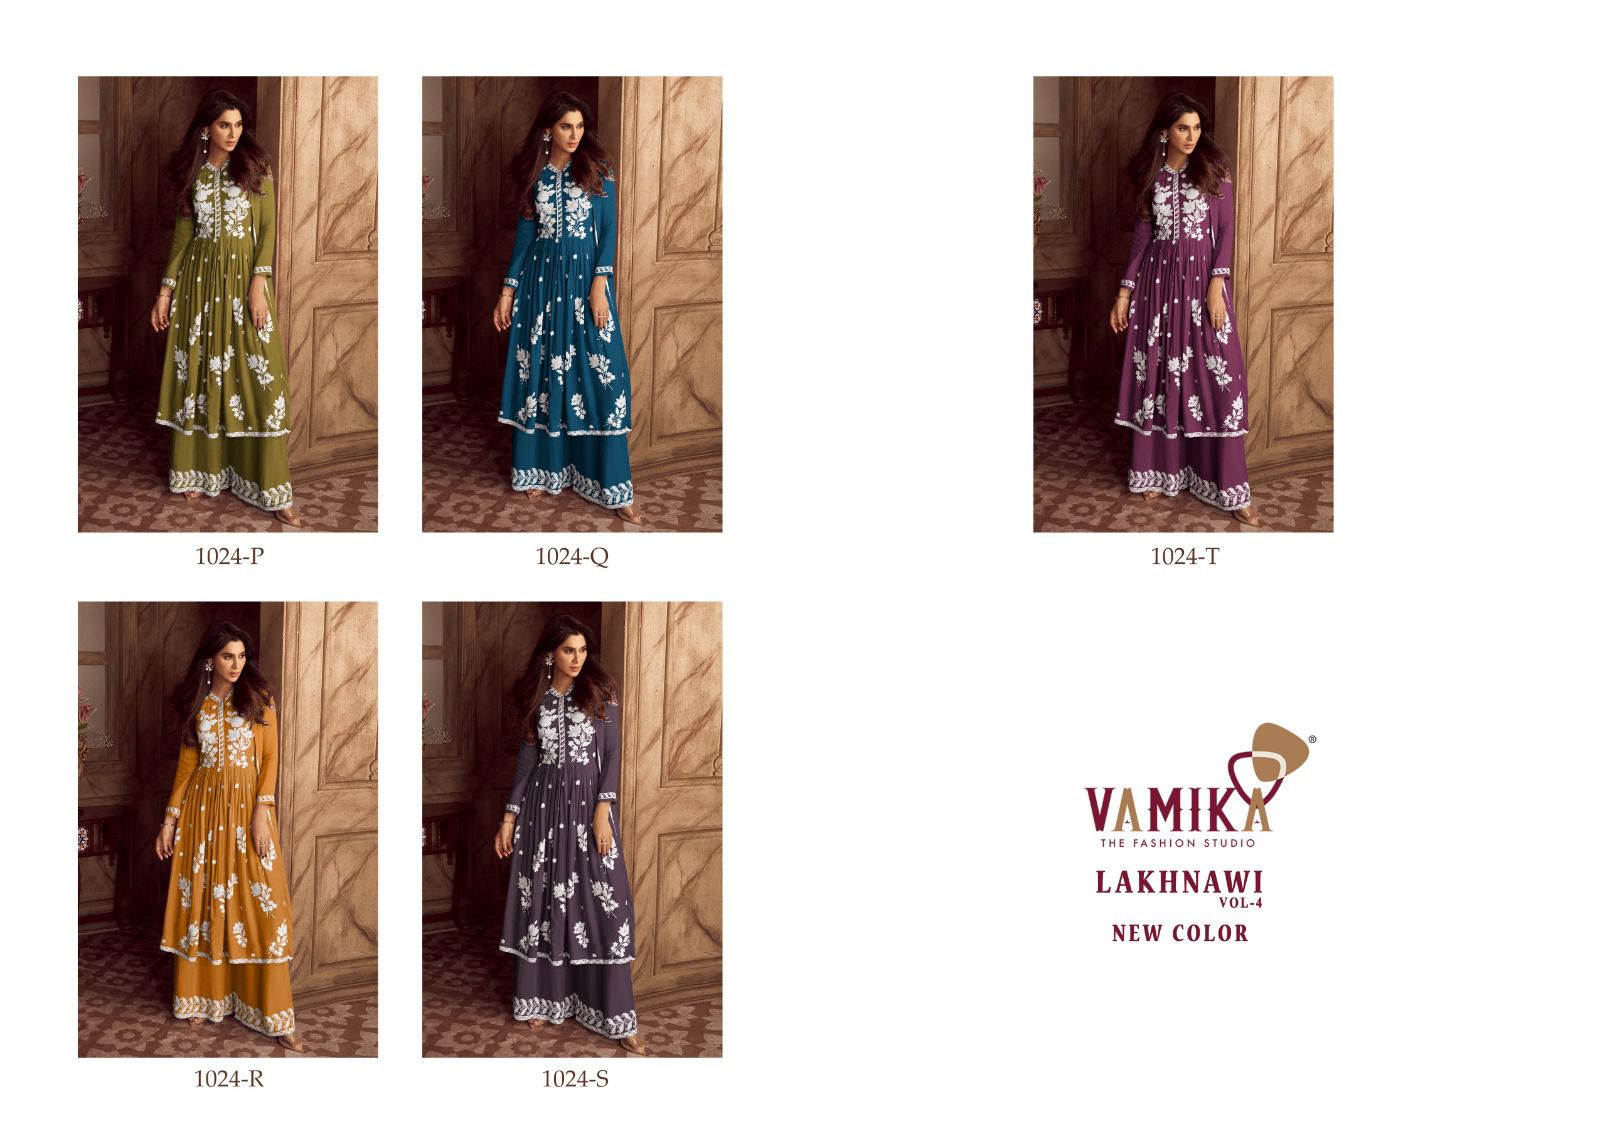 Vamika Lakhnavi Vol 4 New Color collection 1